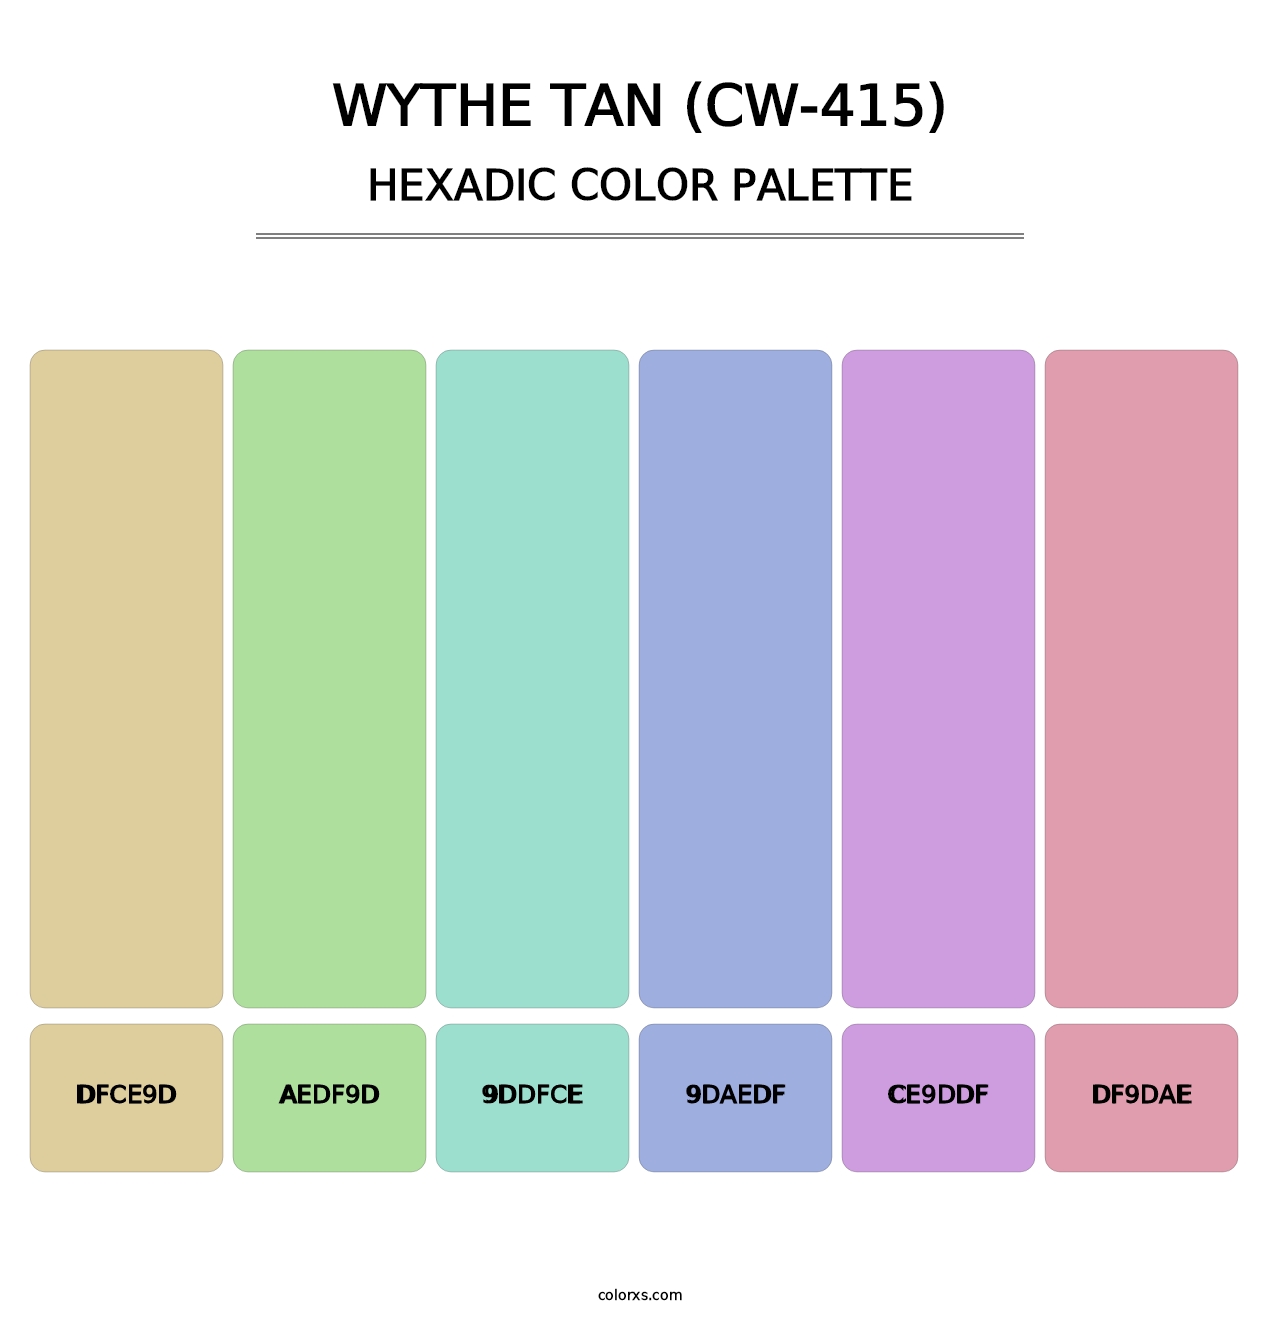 Wythe Tan (CW-415) - Hexadic Color Palette